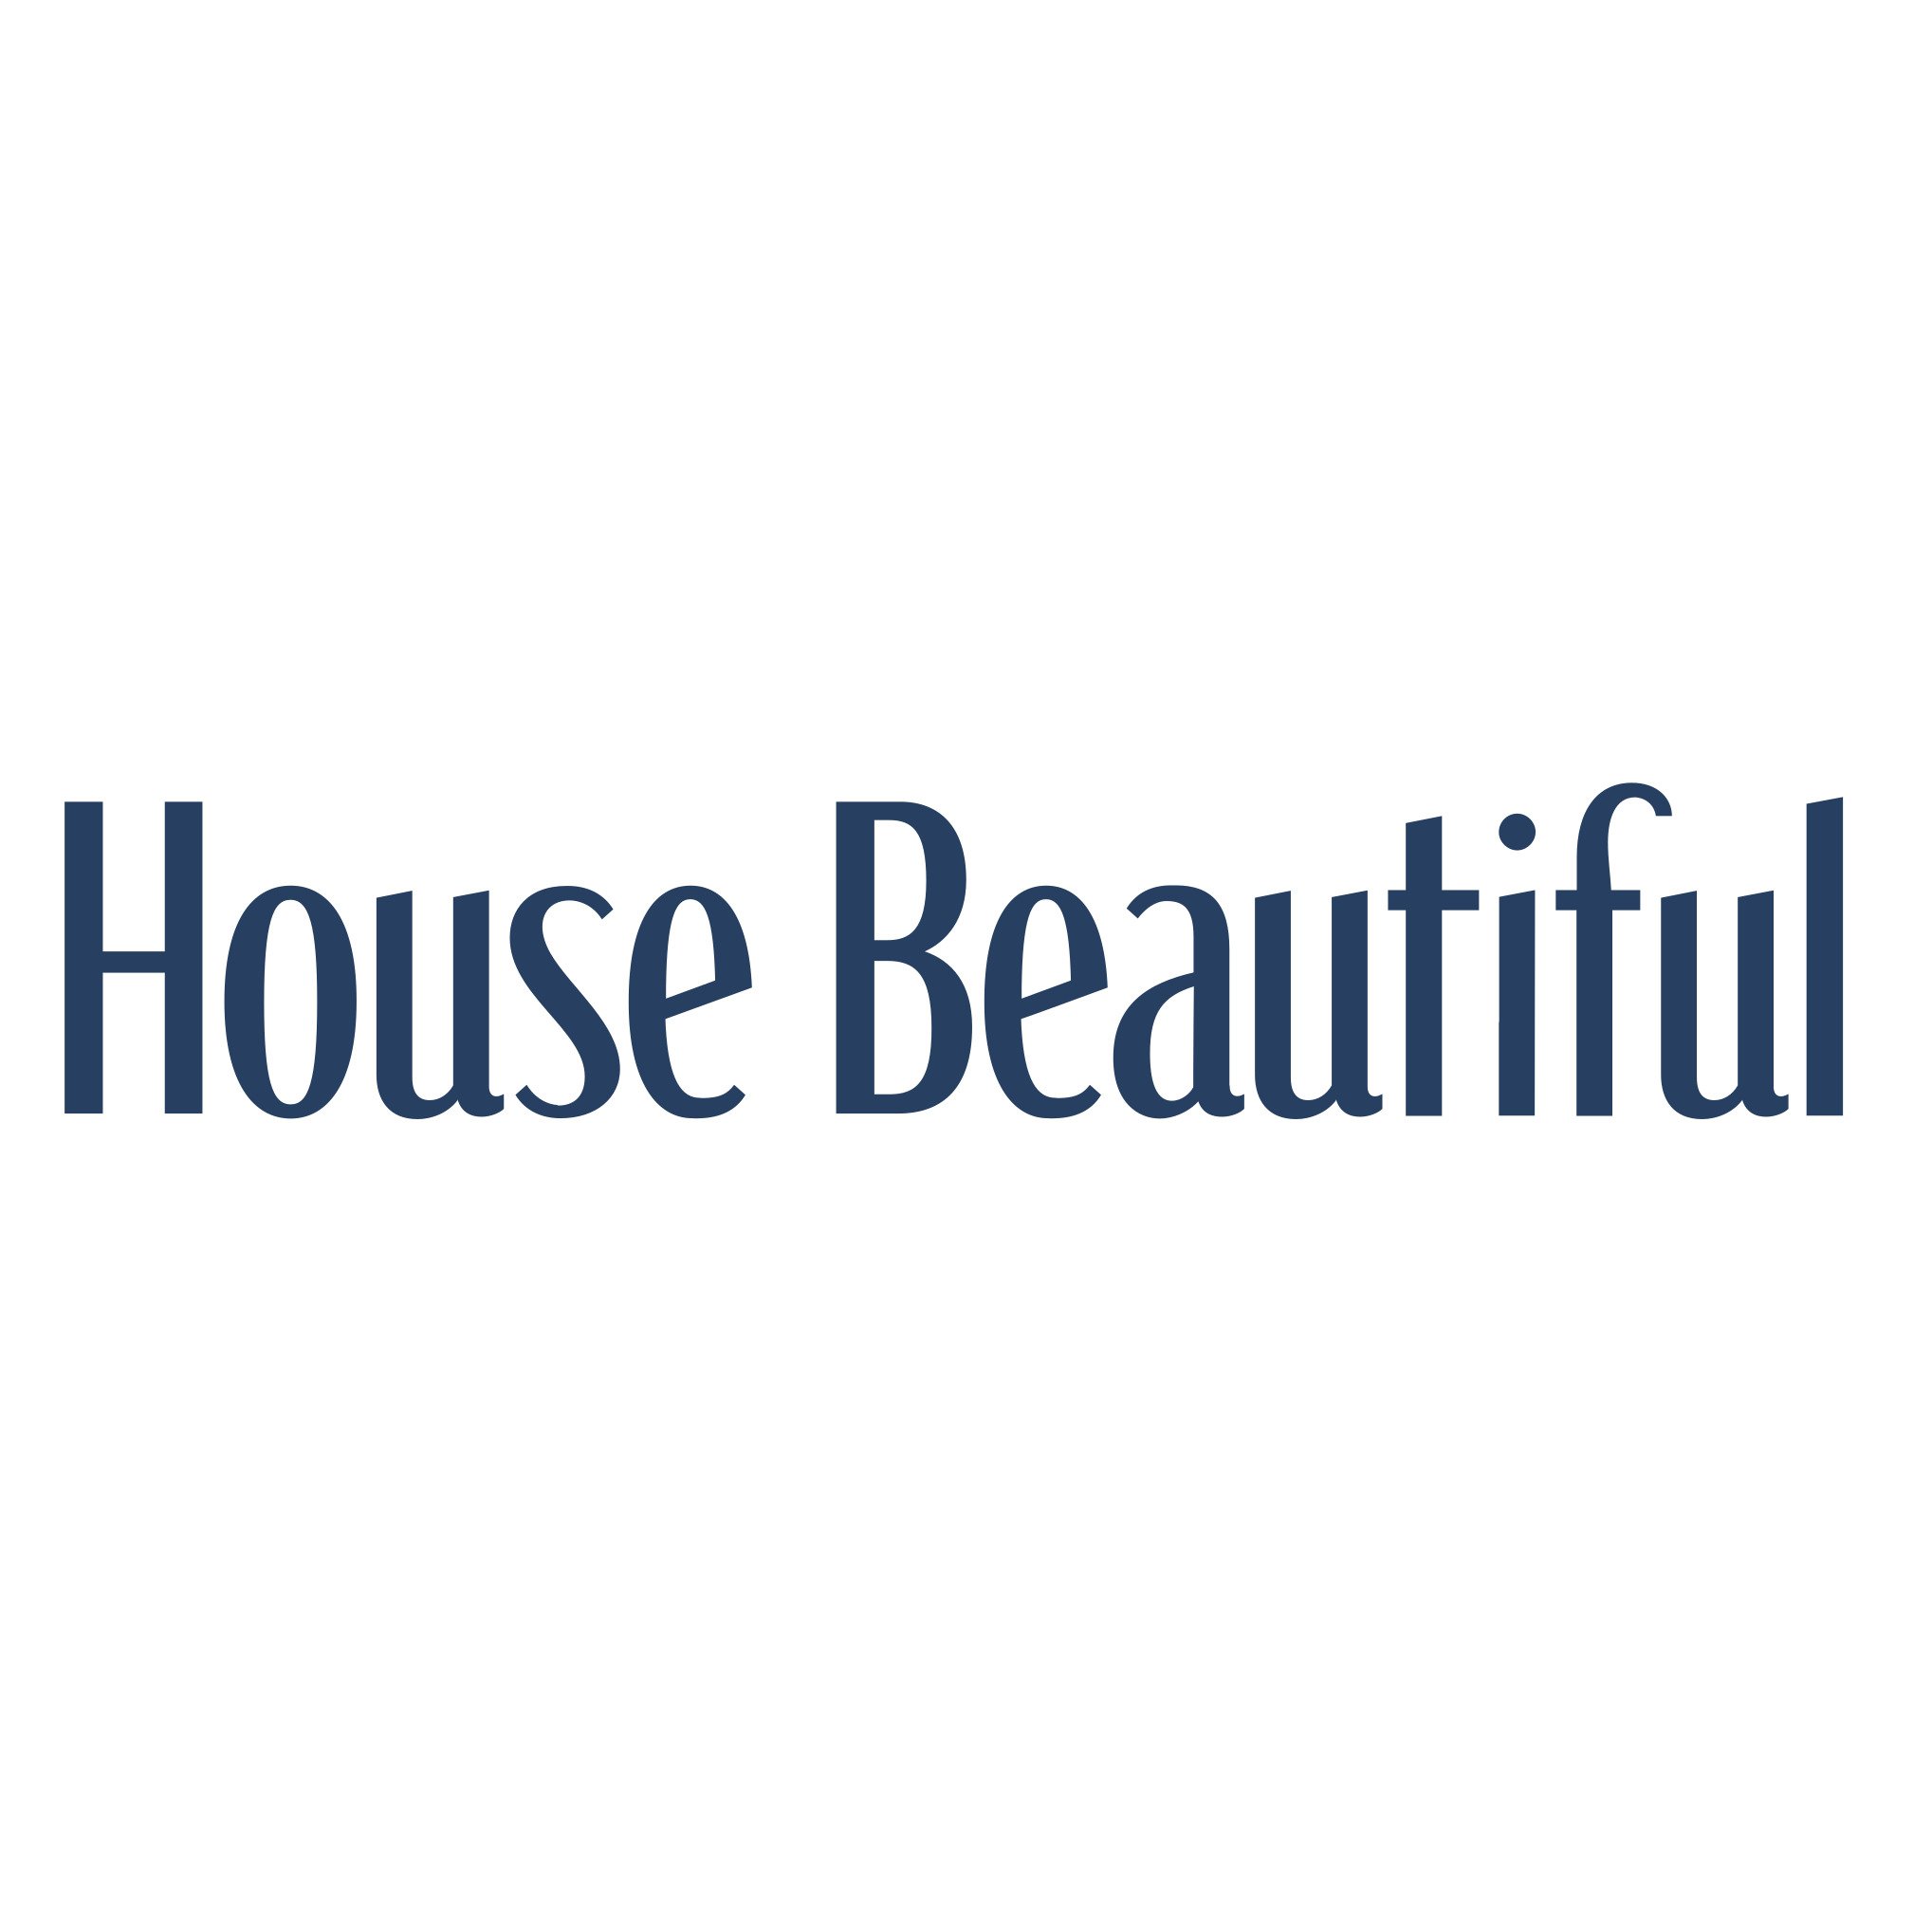 house-beautiful-vector-logo.jpg